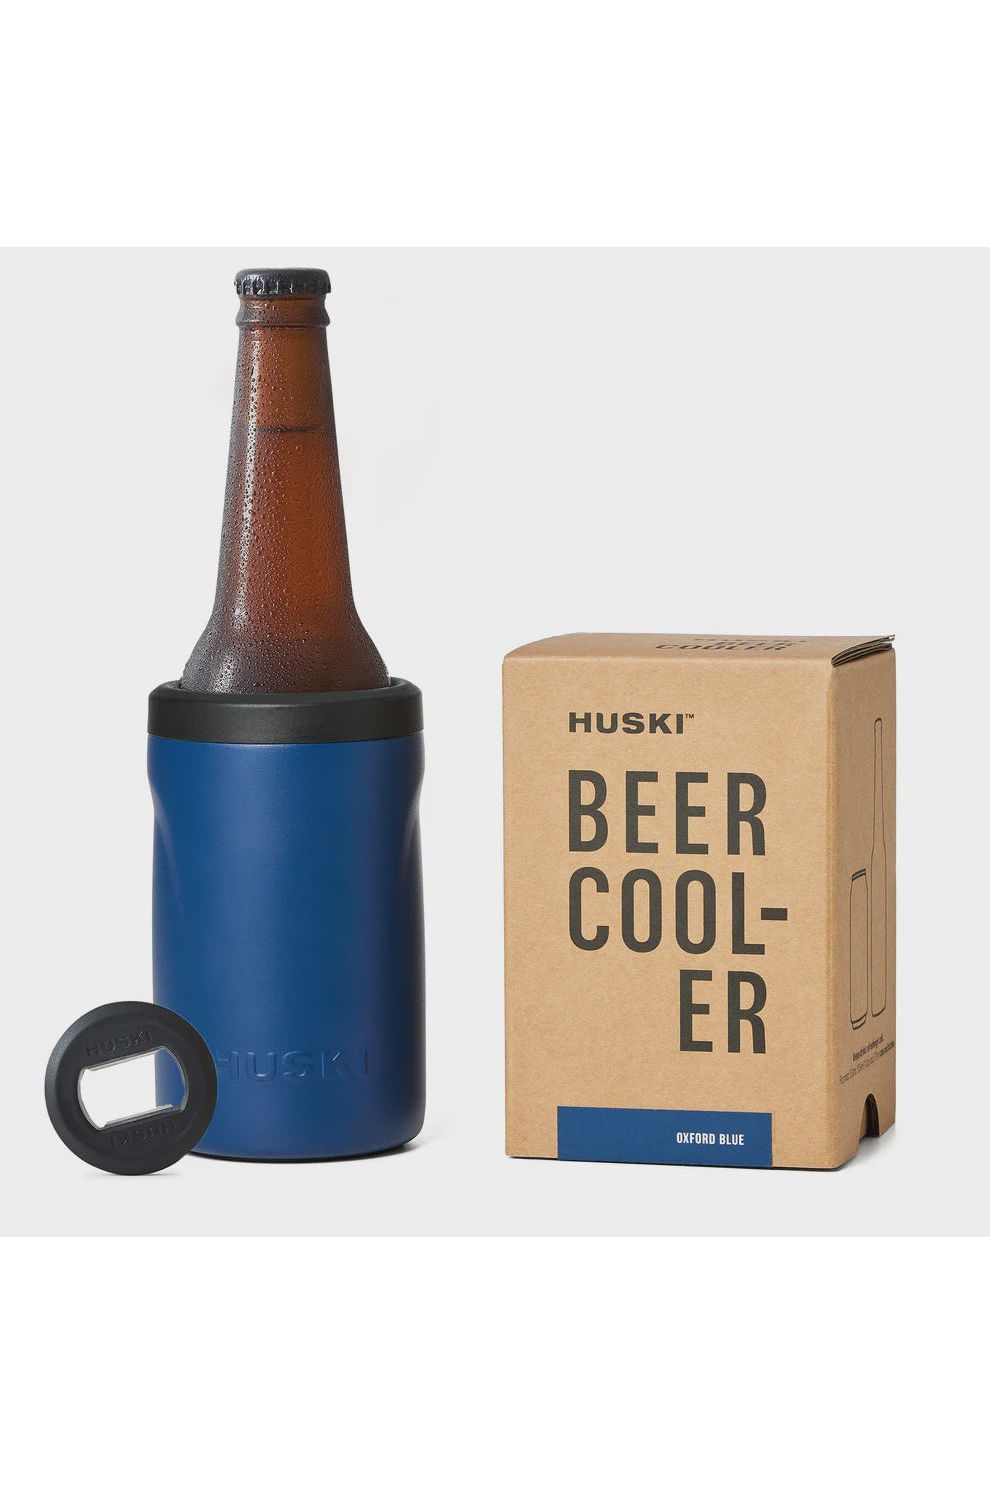 Huski Beer Cooler 2.0 - Good Design